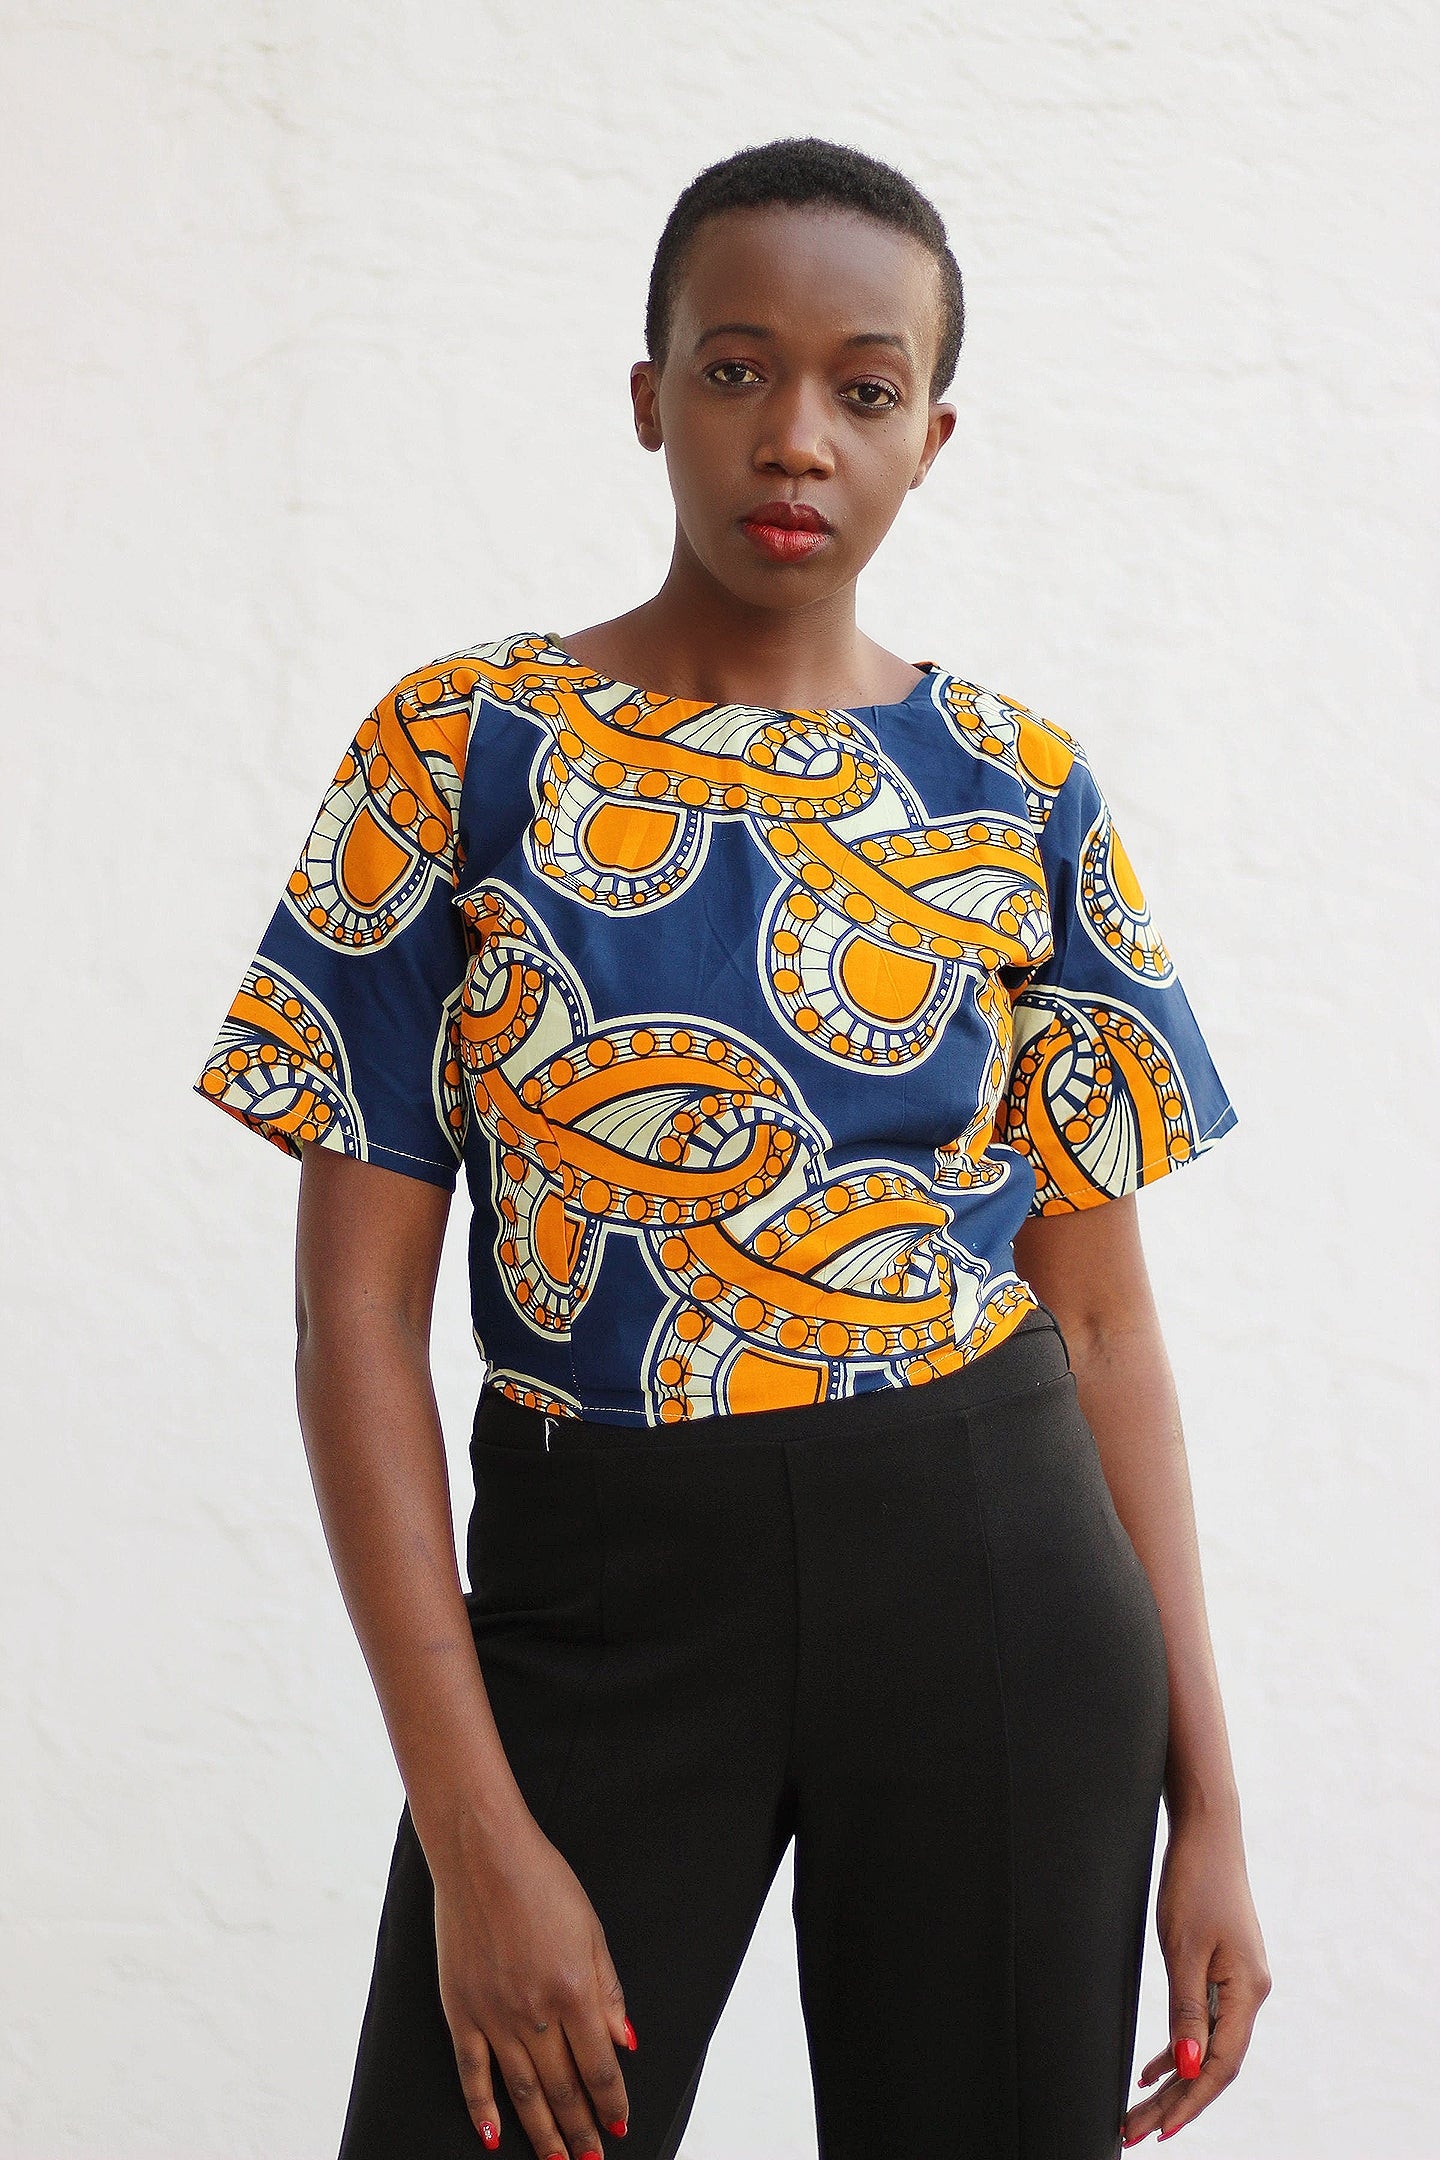 African Print /Ankara/Kitenge Short Sleeve Crop Top  - Musturd Yellow/Navy Blue Floral Print - Africas Closet